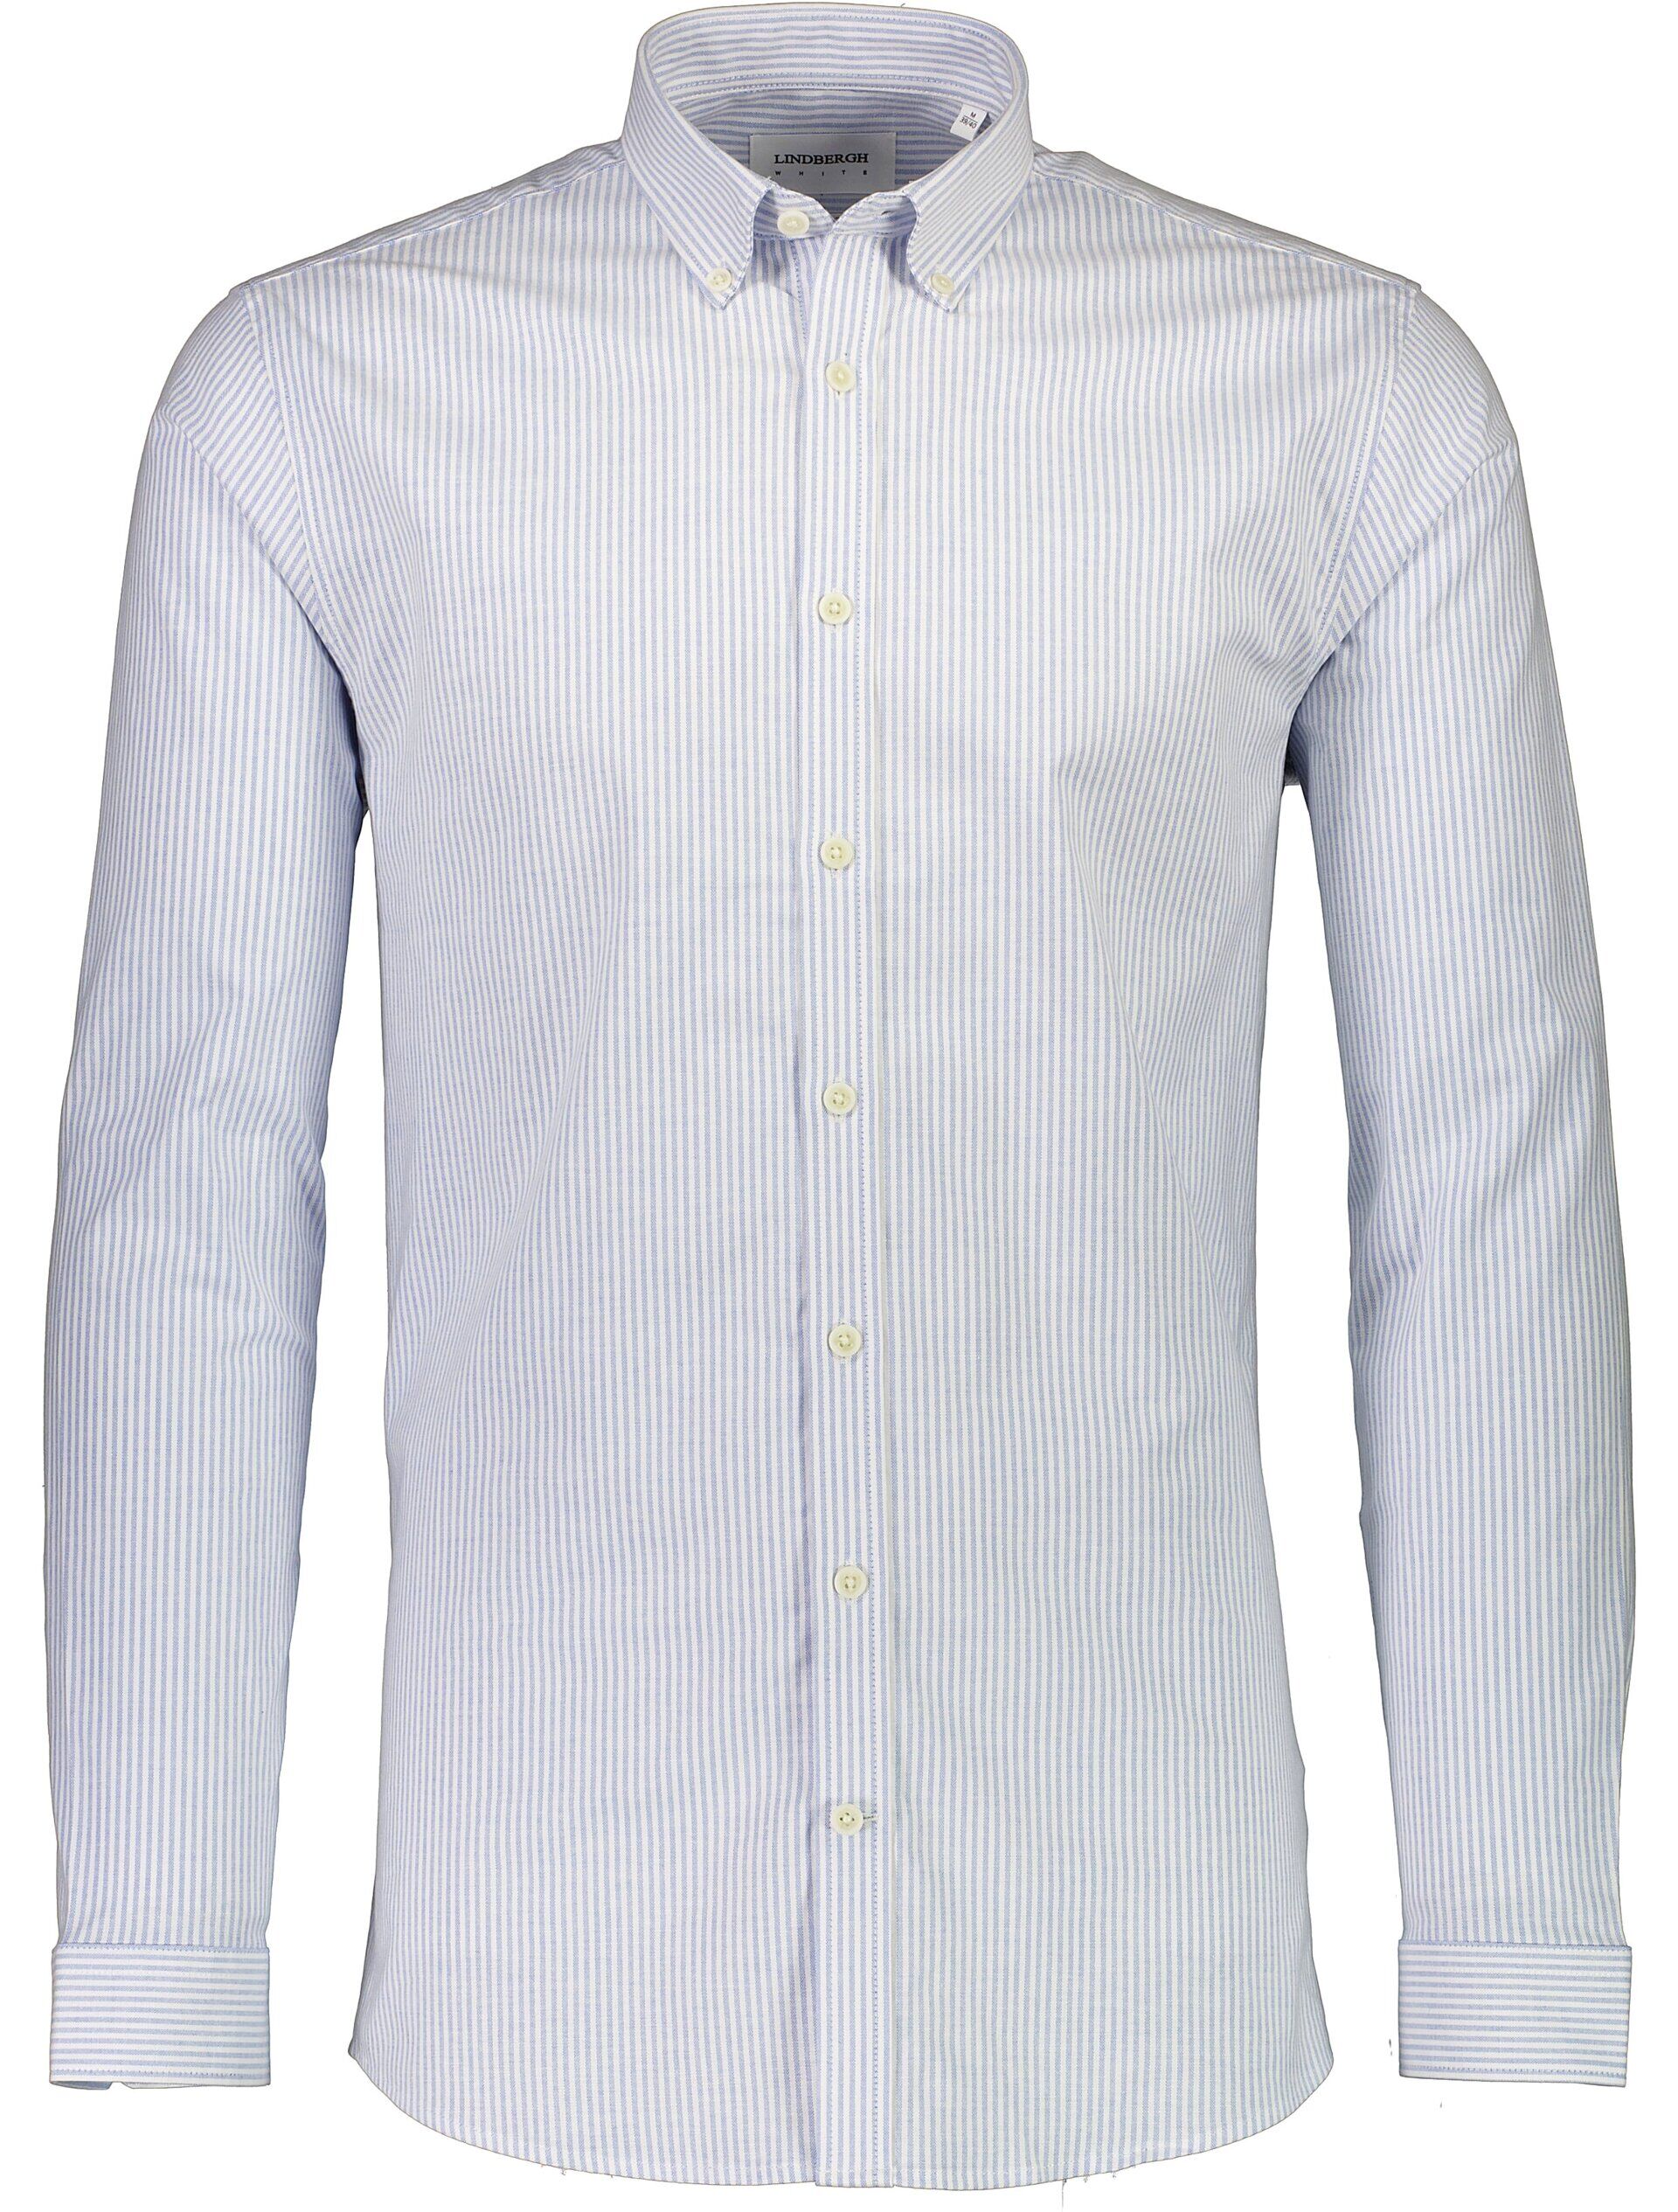 Oxford skjorte Oxford skjorte Blå 30-203296K